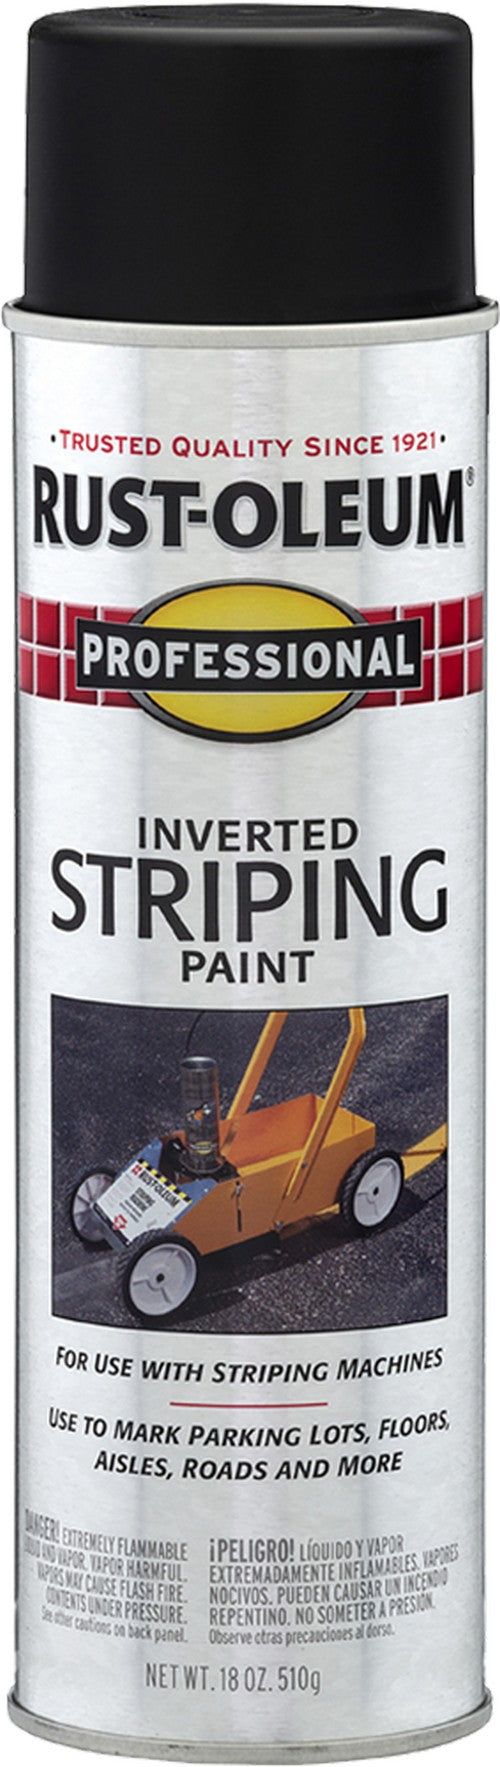 Rust-Oleum Professional Inverted Striping Paint Spray Black